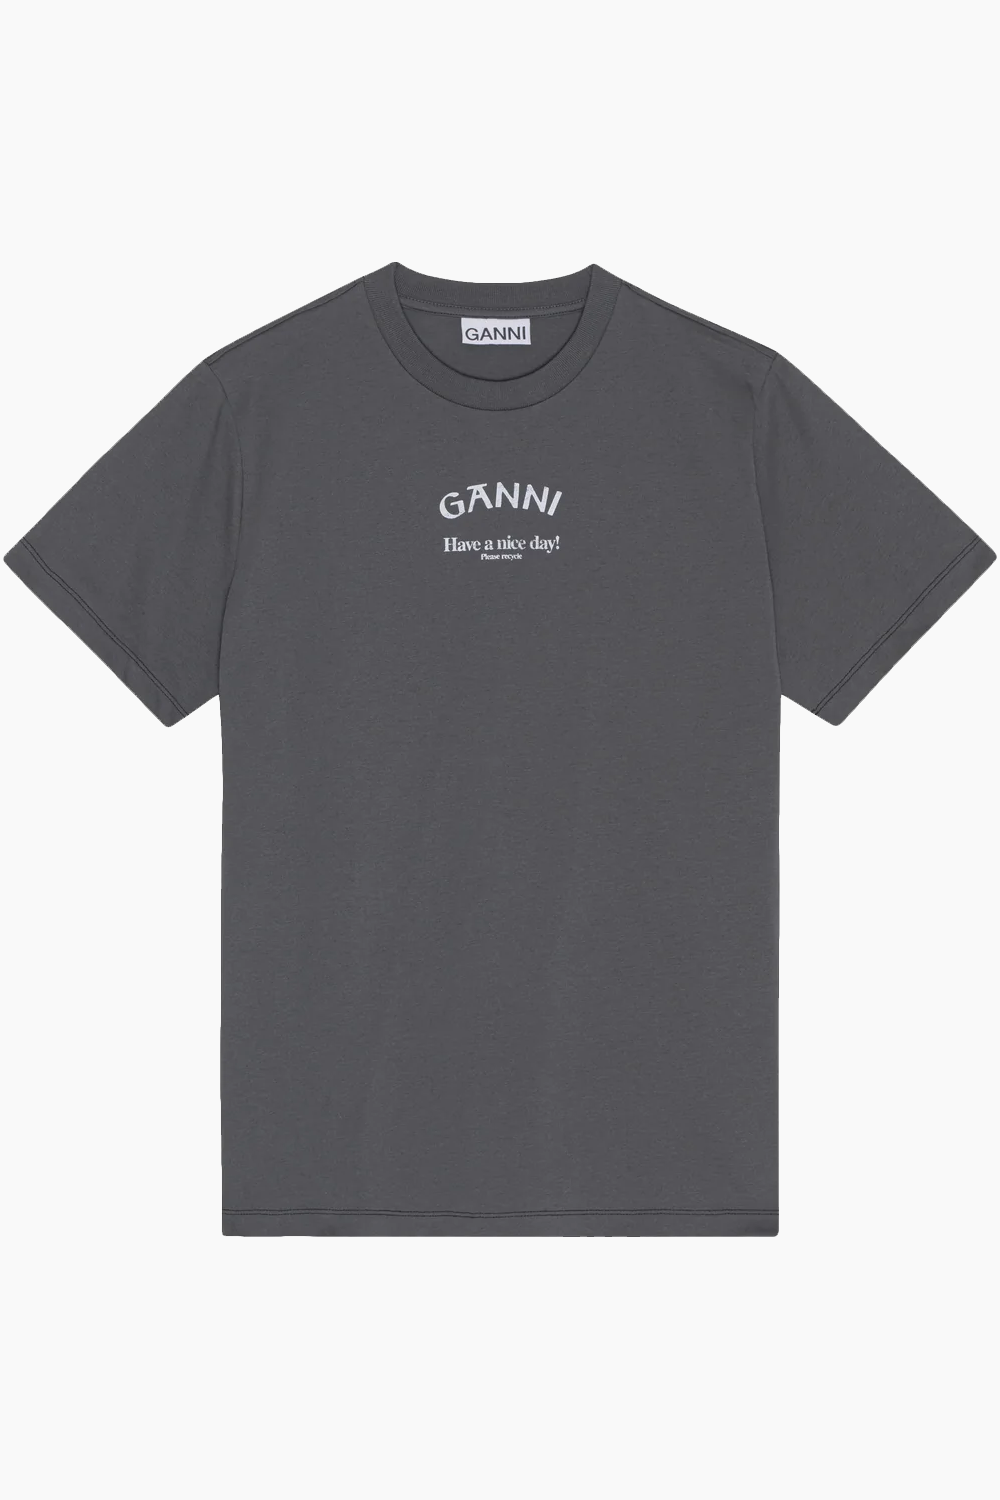 Basic Jersey GANNI Relaxed T-shirt T3590 - Volcanic Ash - GANNI